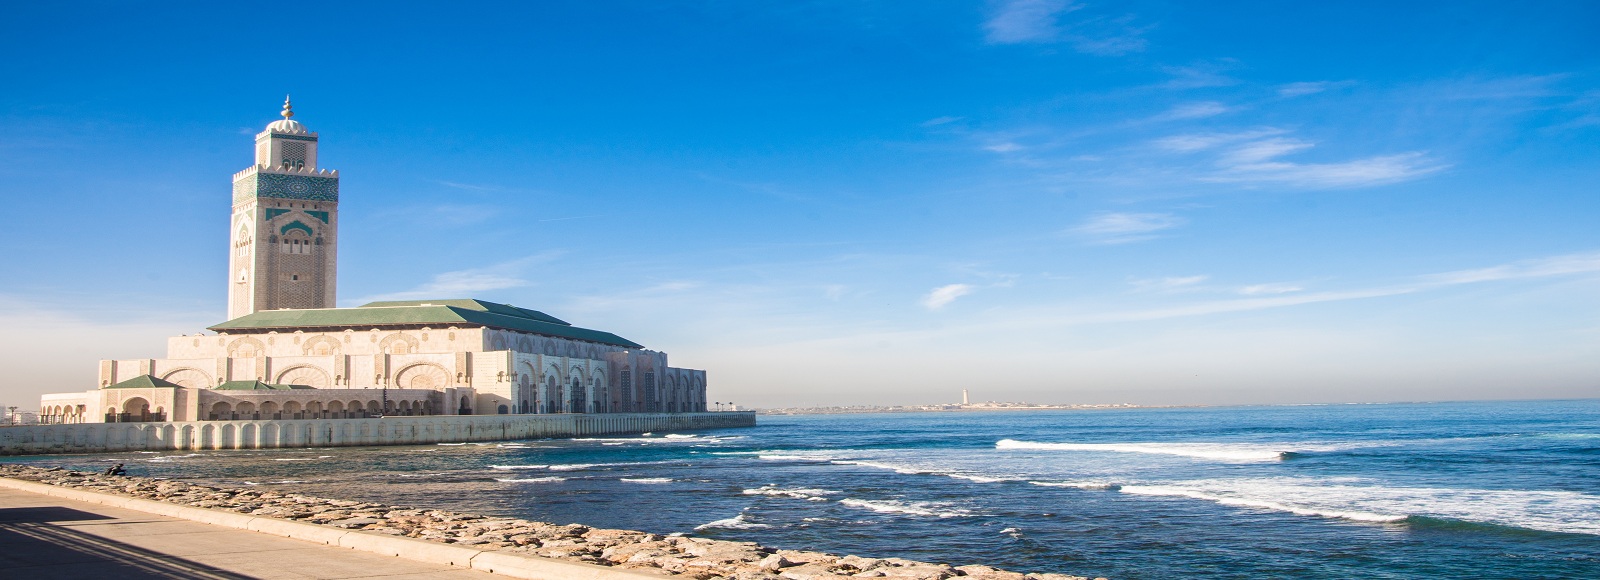 Transfer Offers in Casablanca. Low Cost Transfers in  Casablanca 